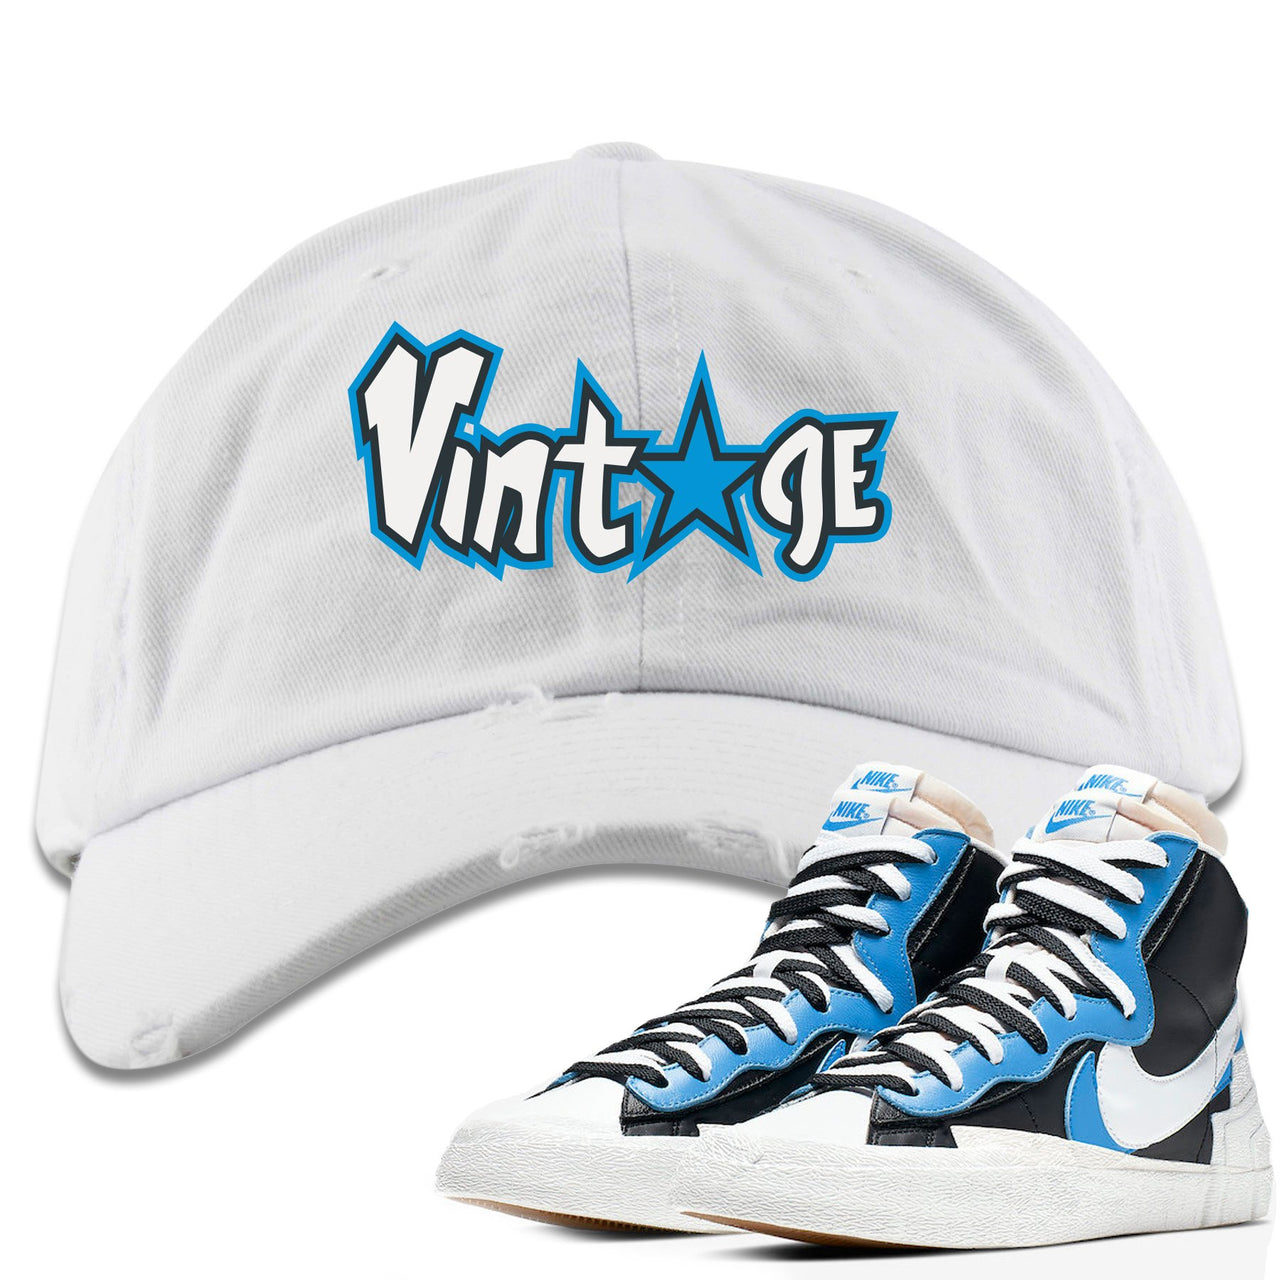 University Blue Blazers Distressed Dad Hat | Vintage Logo with Star, White